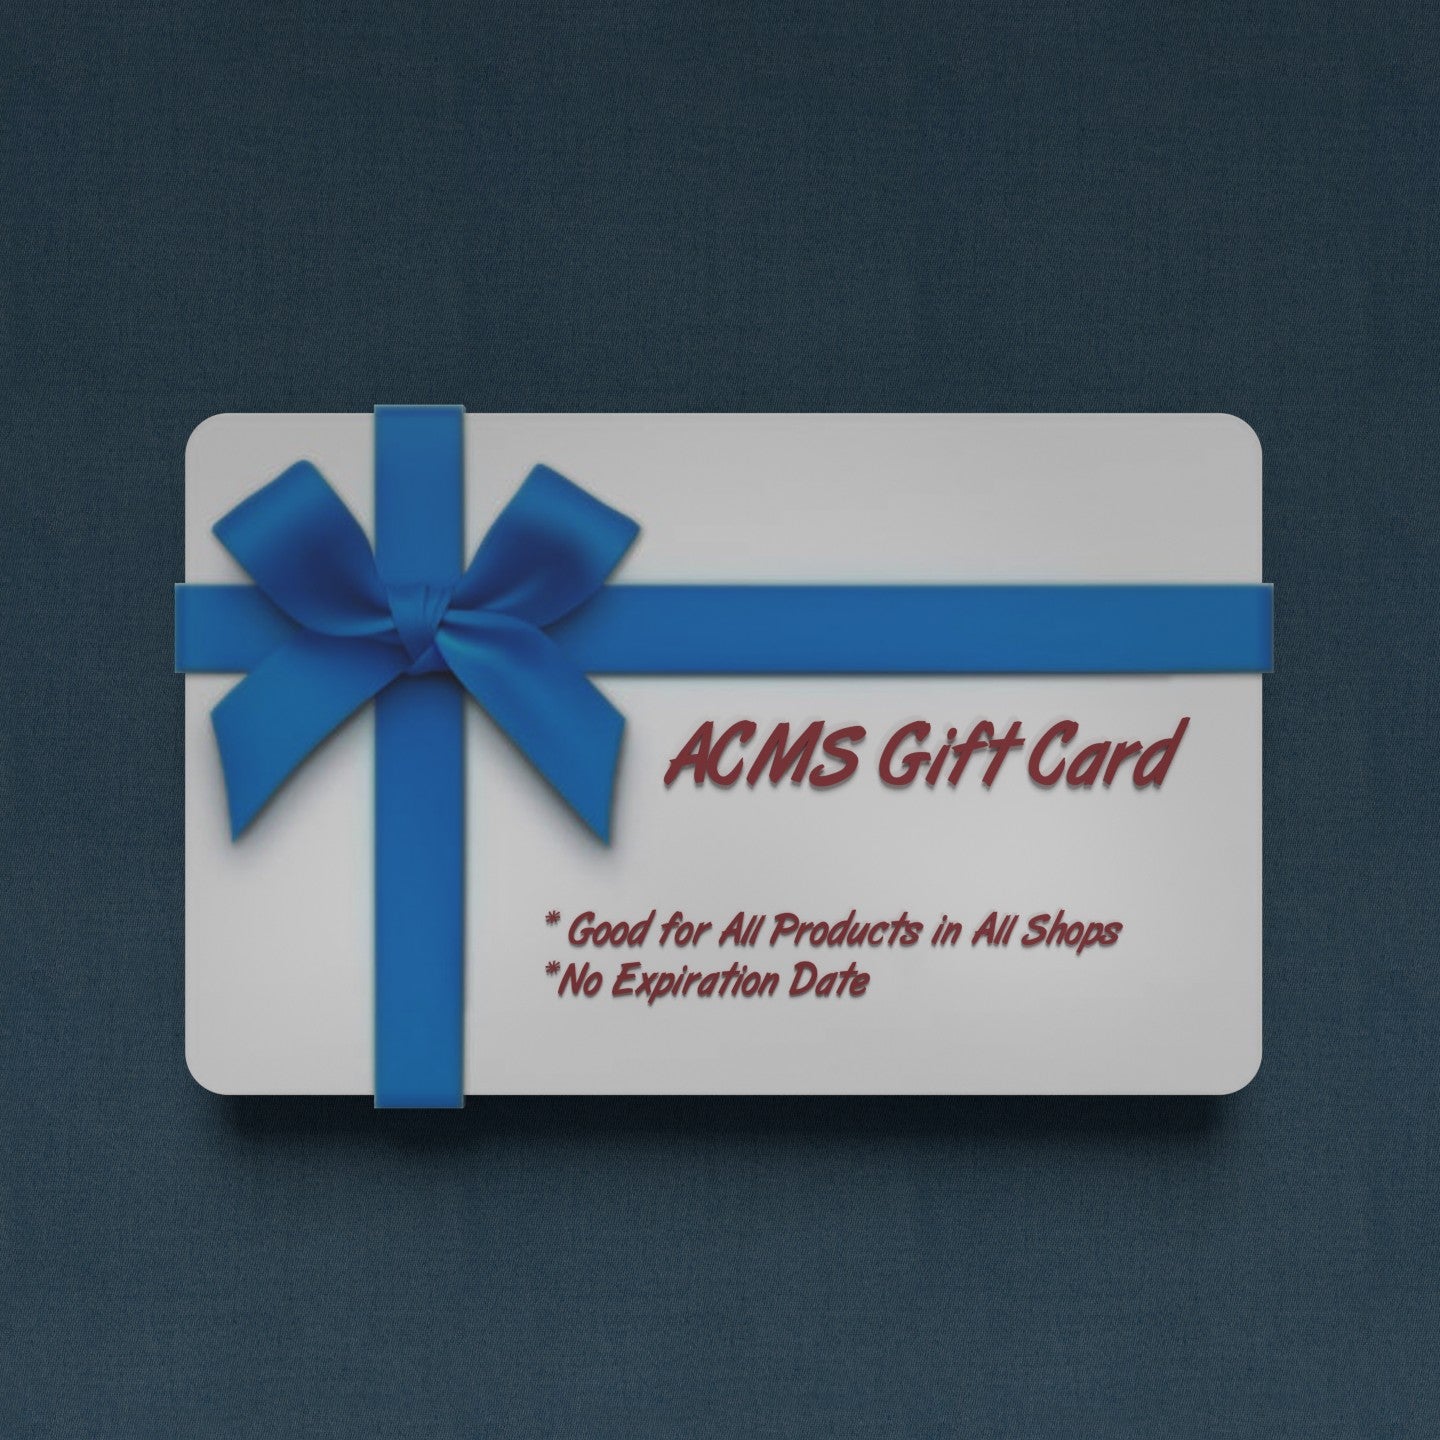 ACMS Gift Card